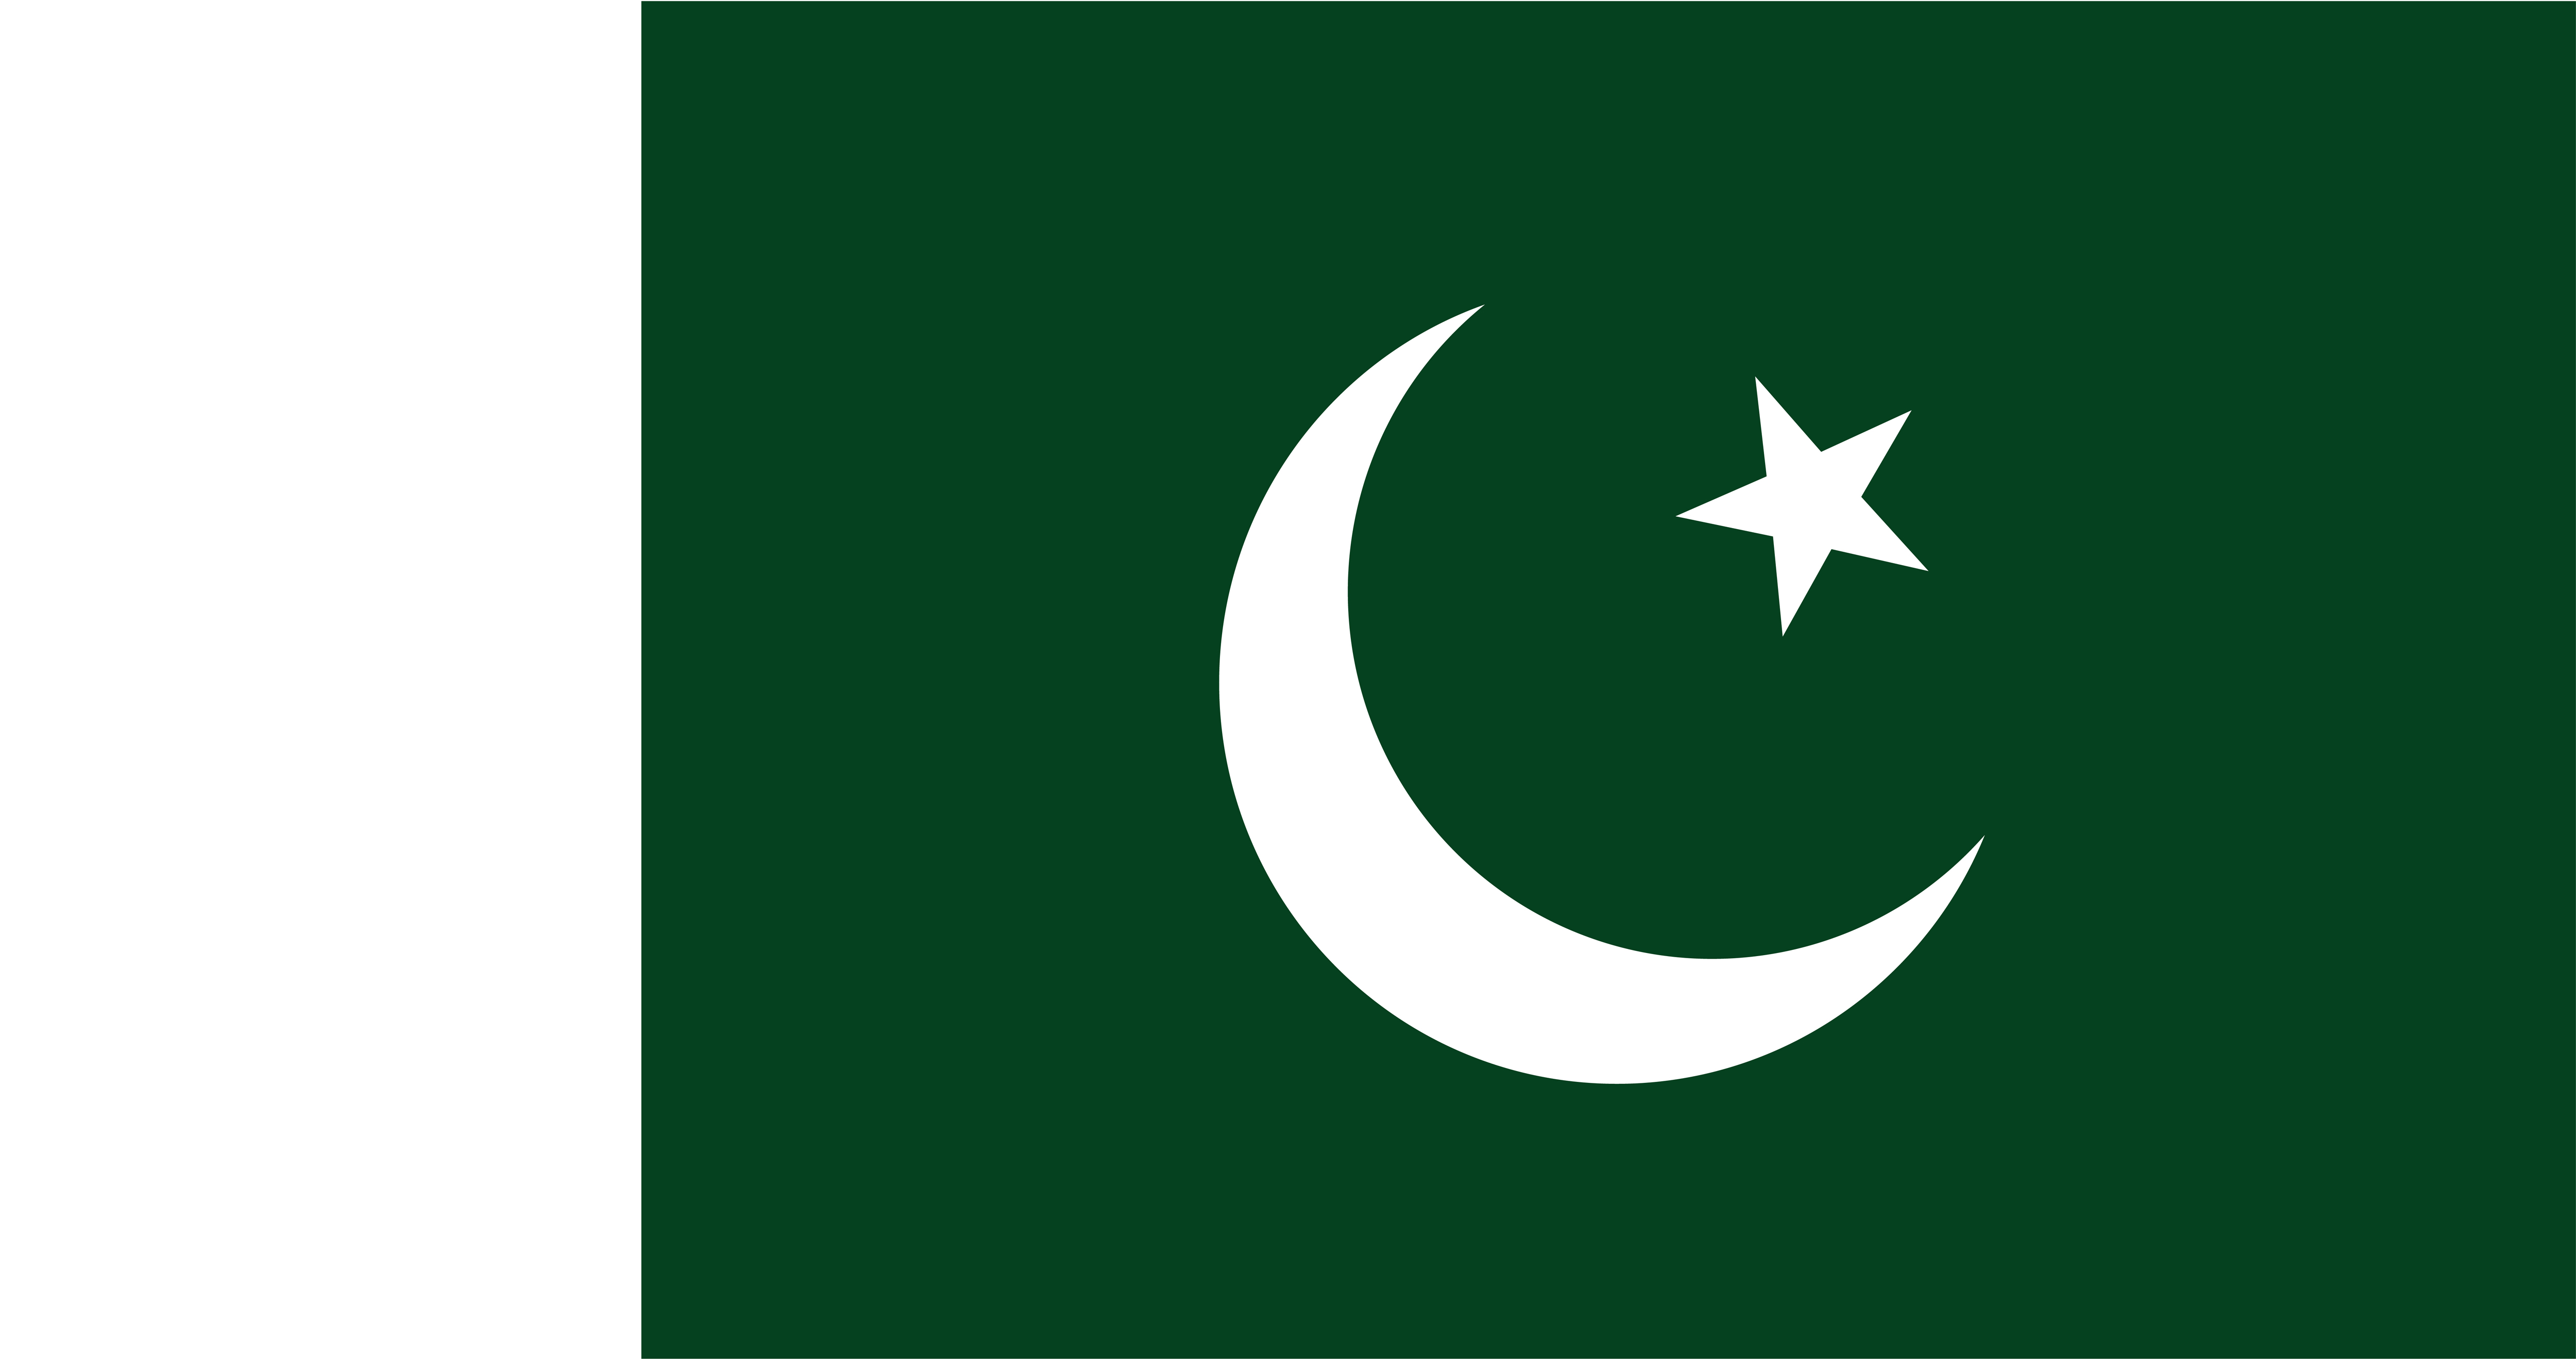 Illustration of Pakistan flag - Download Free Vectors ...